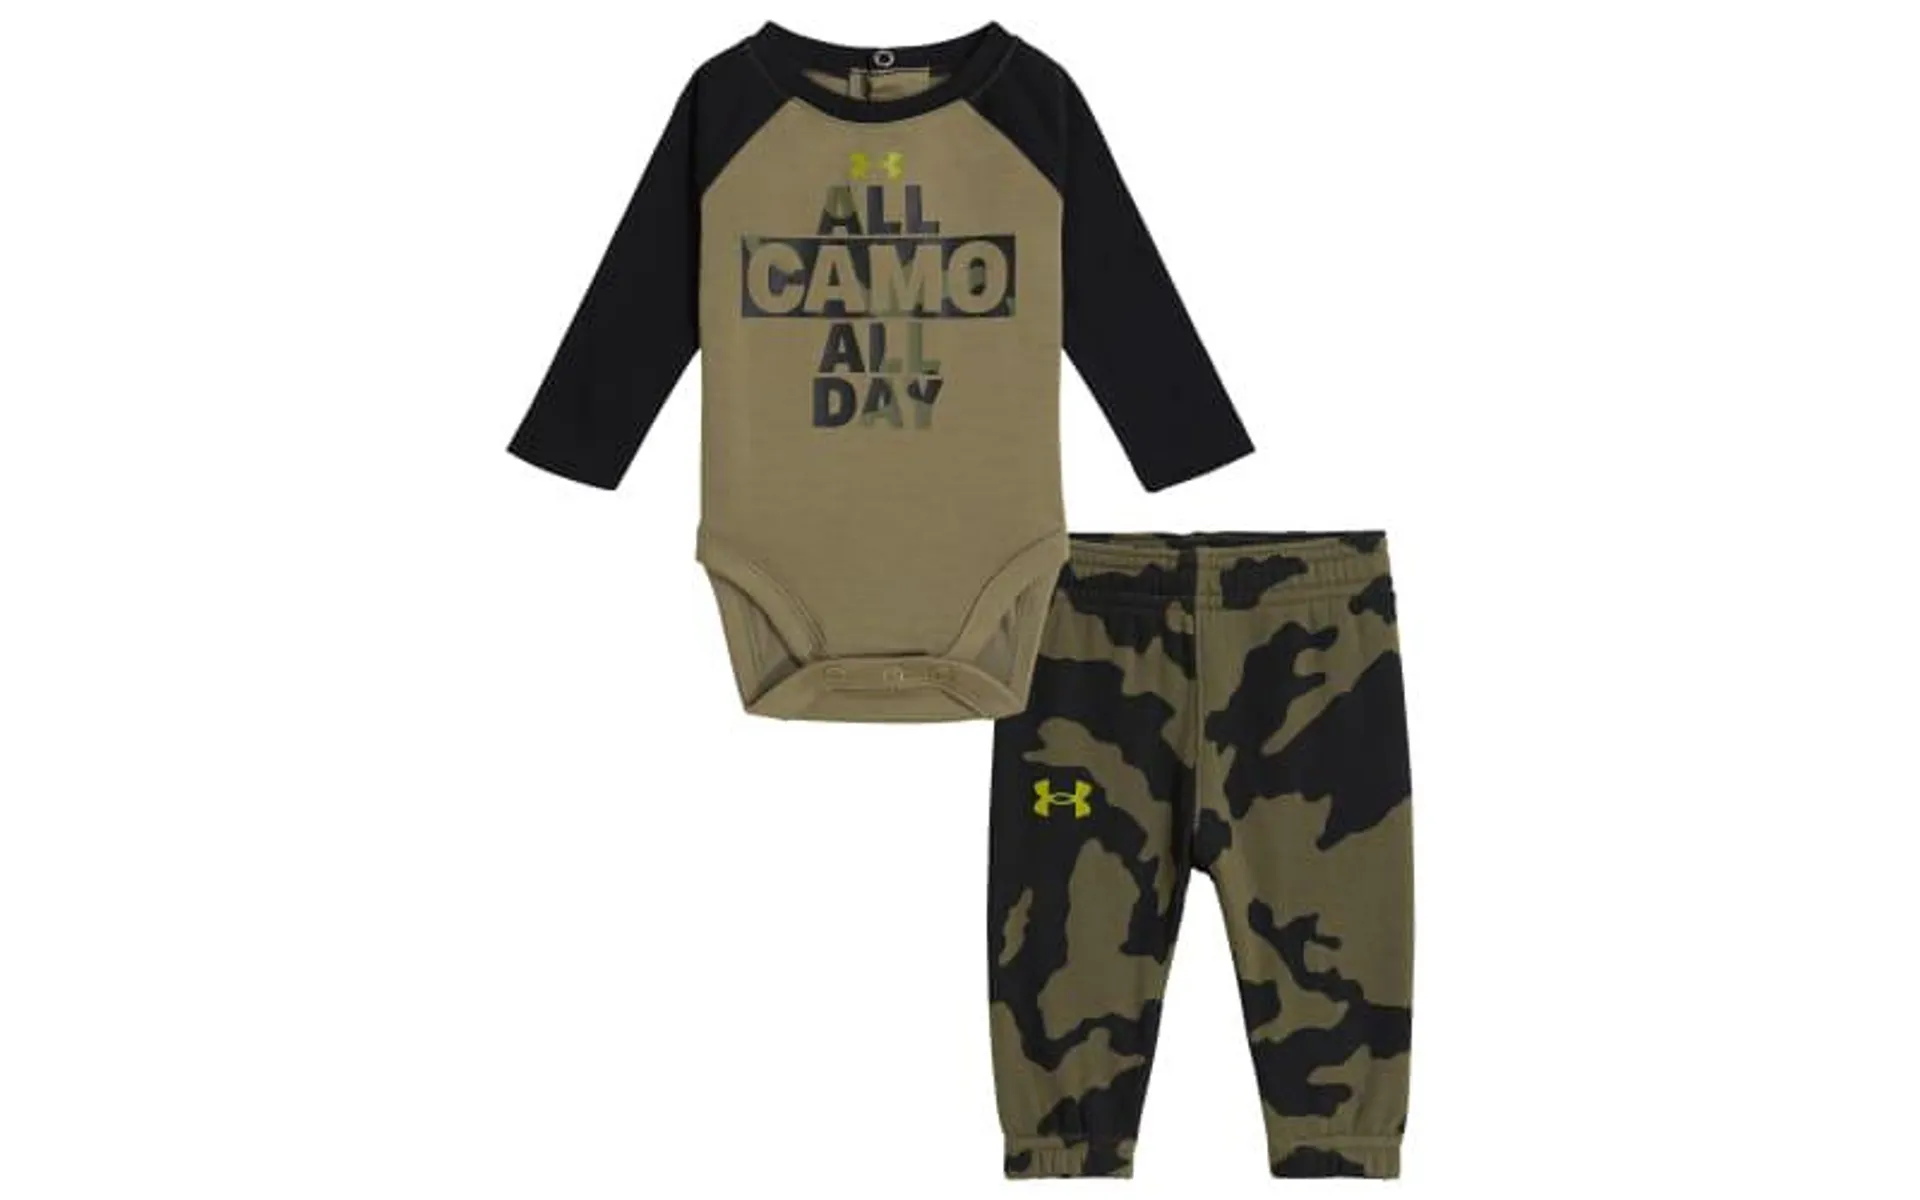 Under Armour All Camo All Day Raglan Long-Sleeve Bodysuit and Fleece Pants Set for Babies